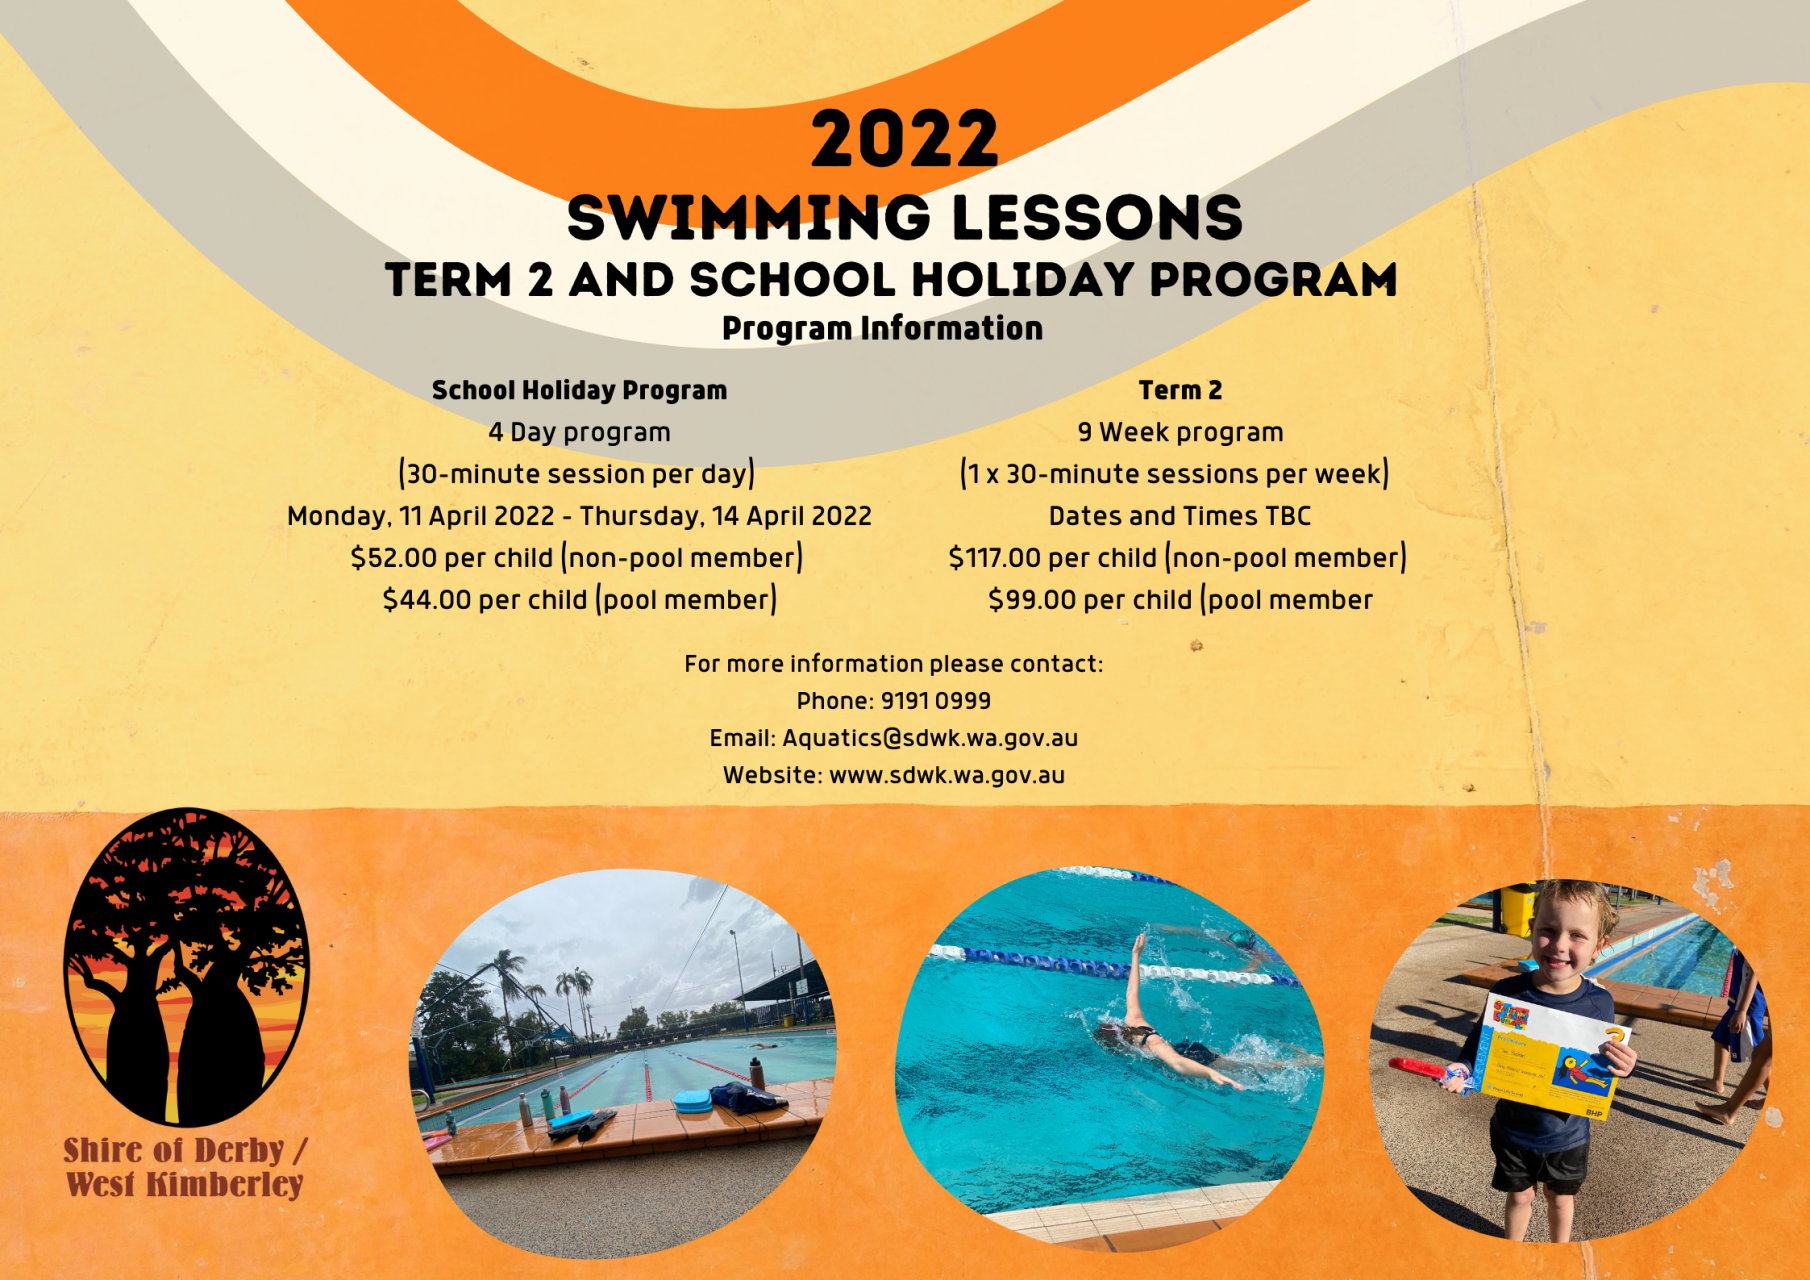 Swimming Lessons – Term 2 (9 week program)